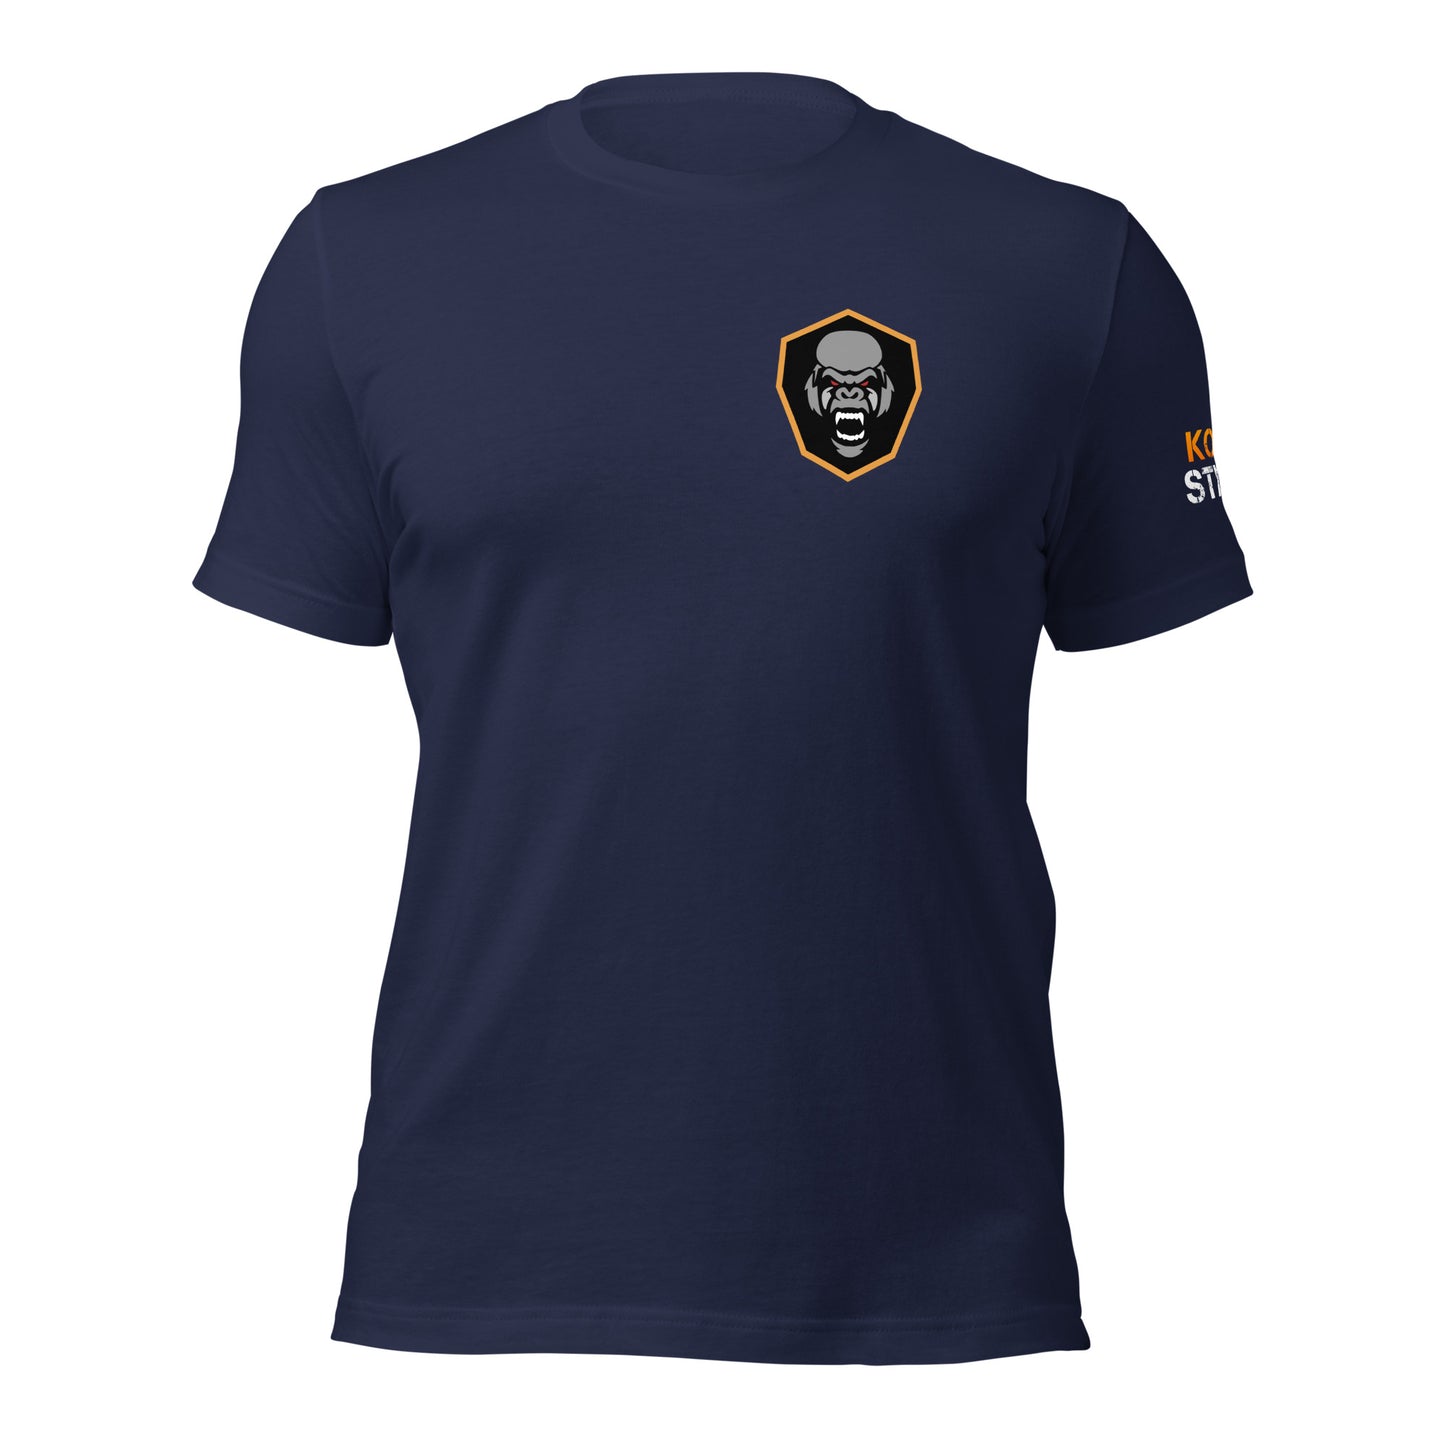 Kong Shield 2.0 Unisex t-shirt